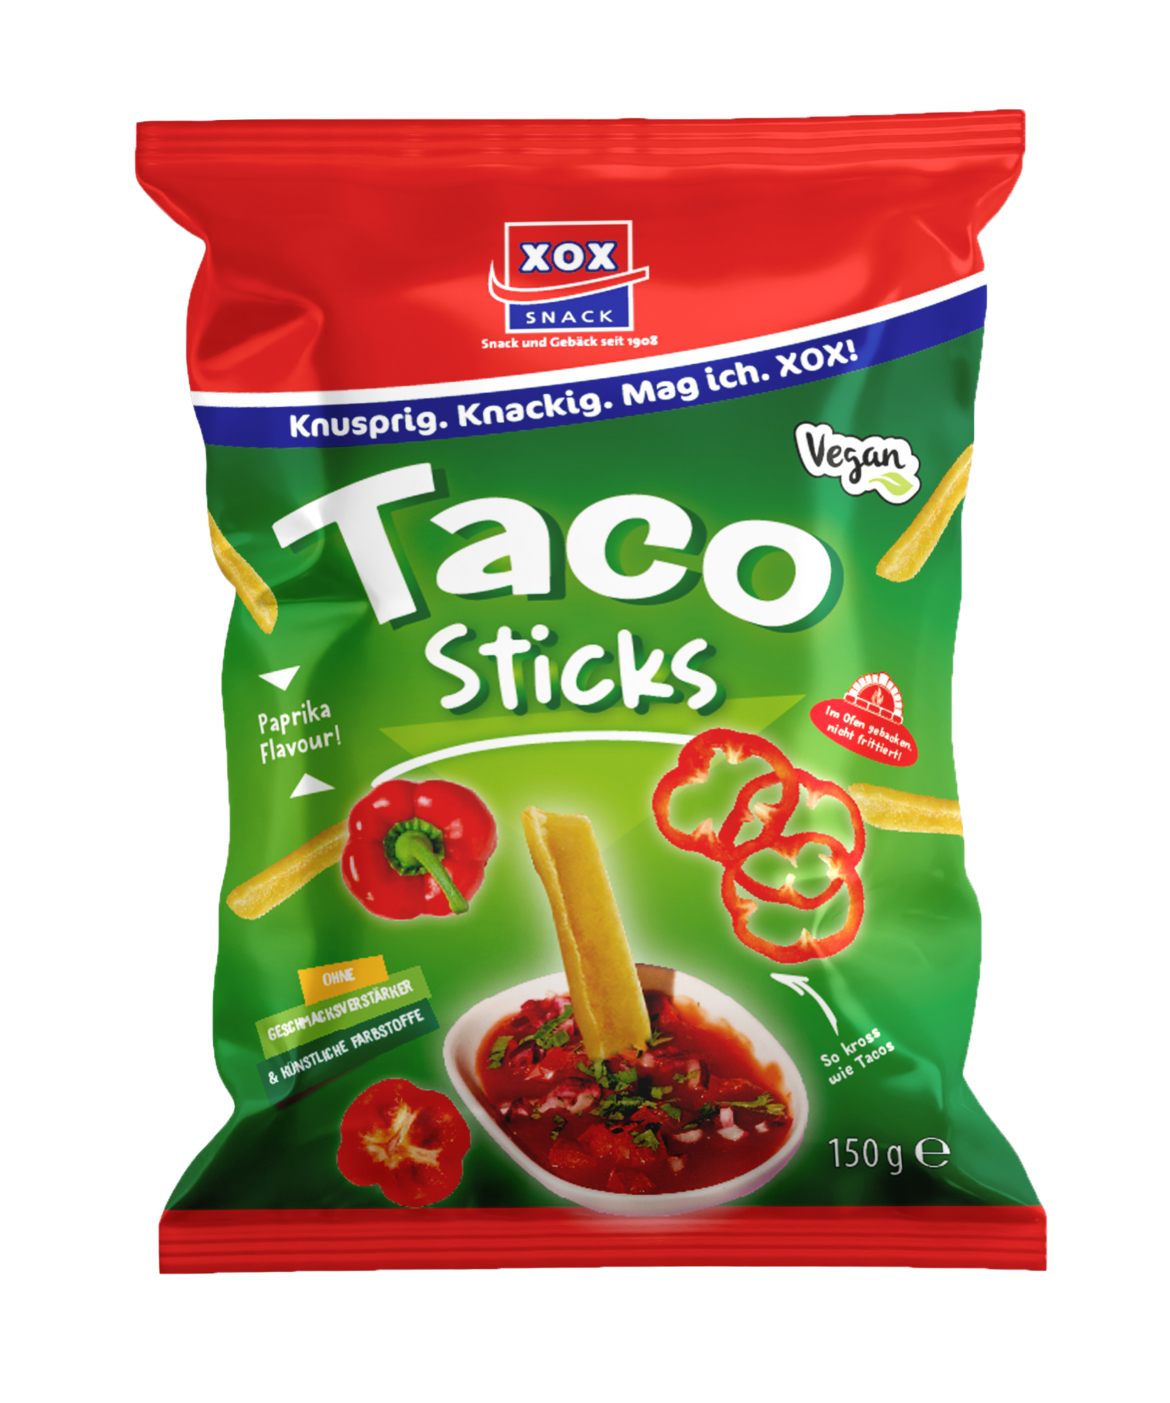 XOX Taco Sticks Paprika